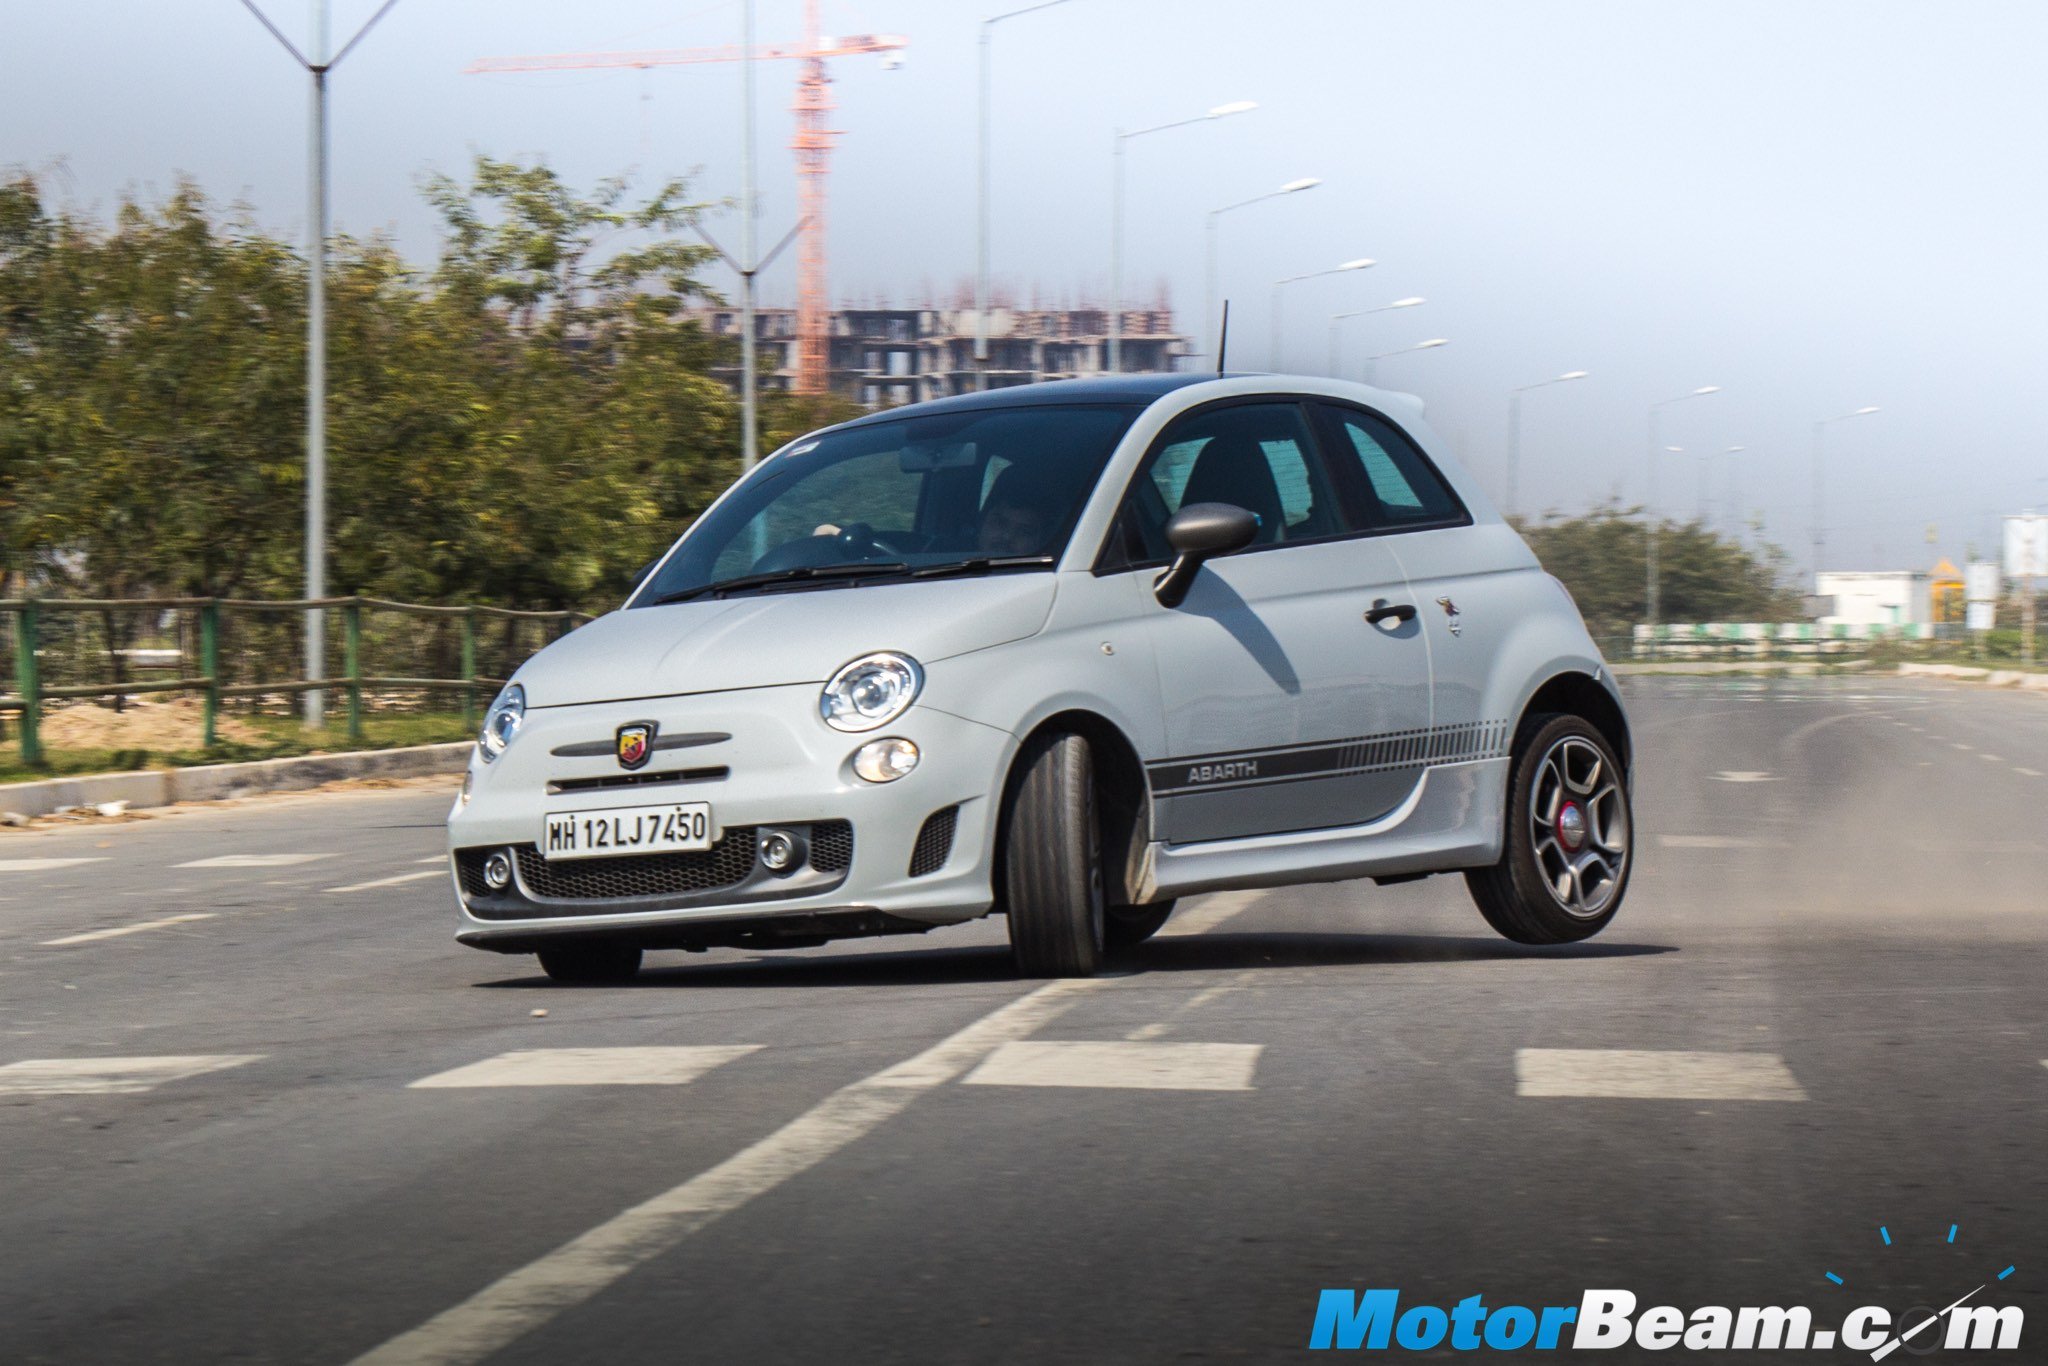 https://www.motorbeam.com/wp-content/uploads/Fiat-Abarth-595-Competizione-Road-Test.jpg